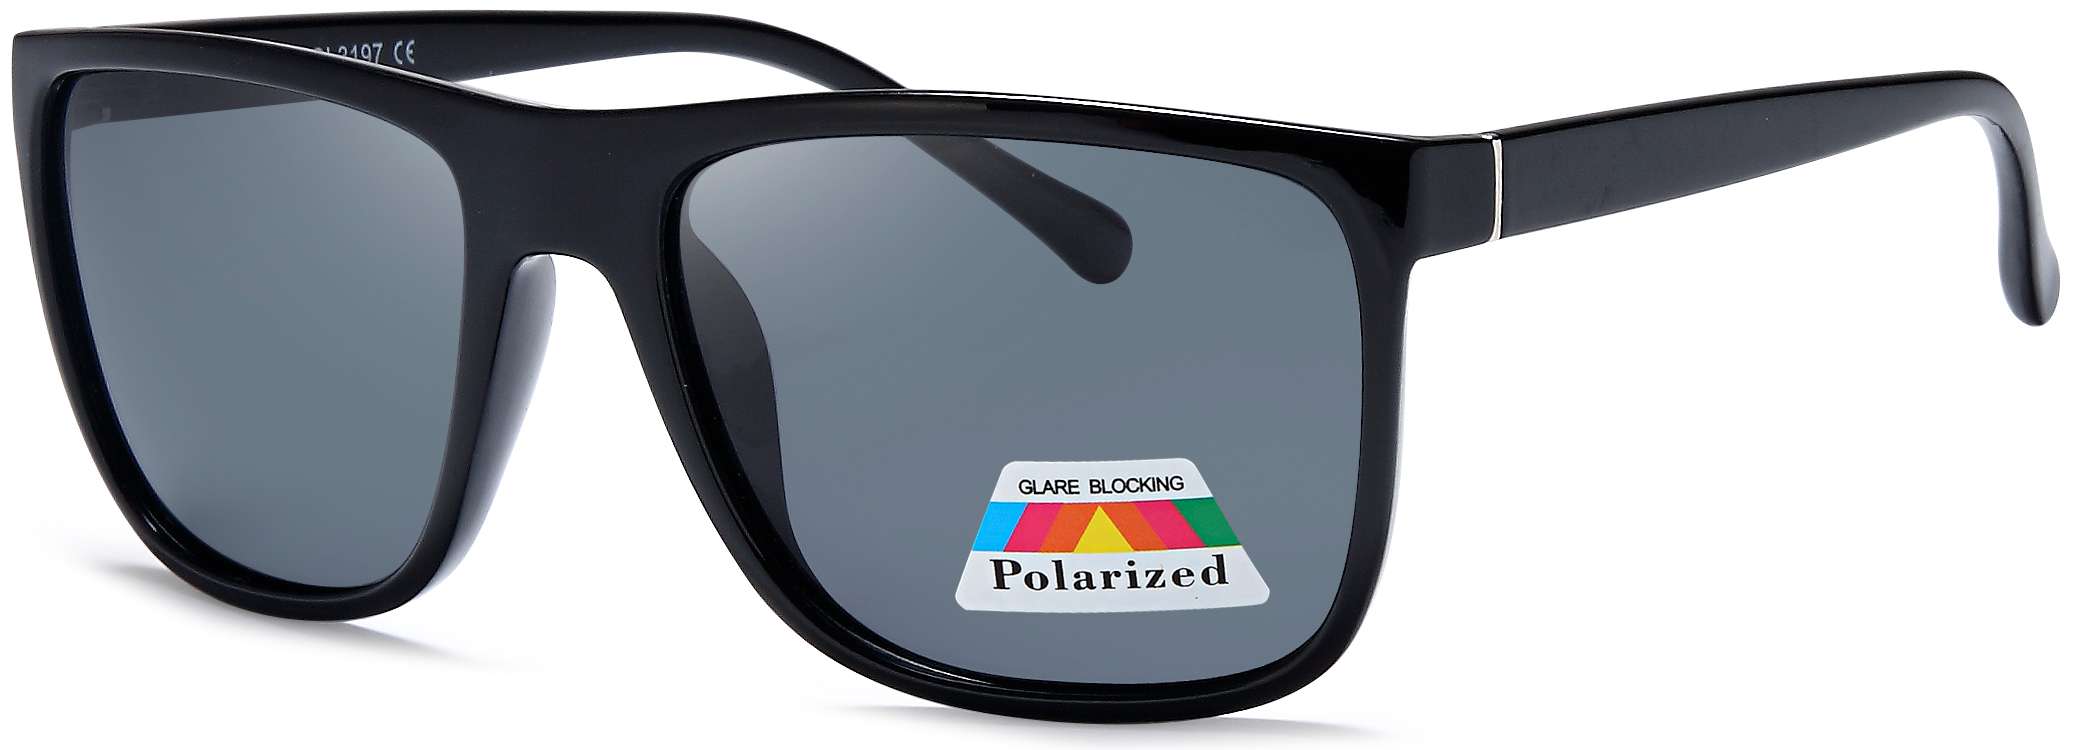 Square Polarized Sunglasses - POL3197 - Beach Time Sunglasses